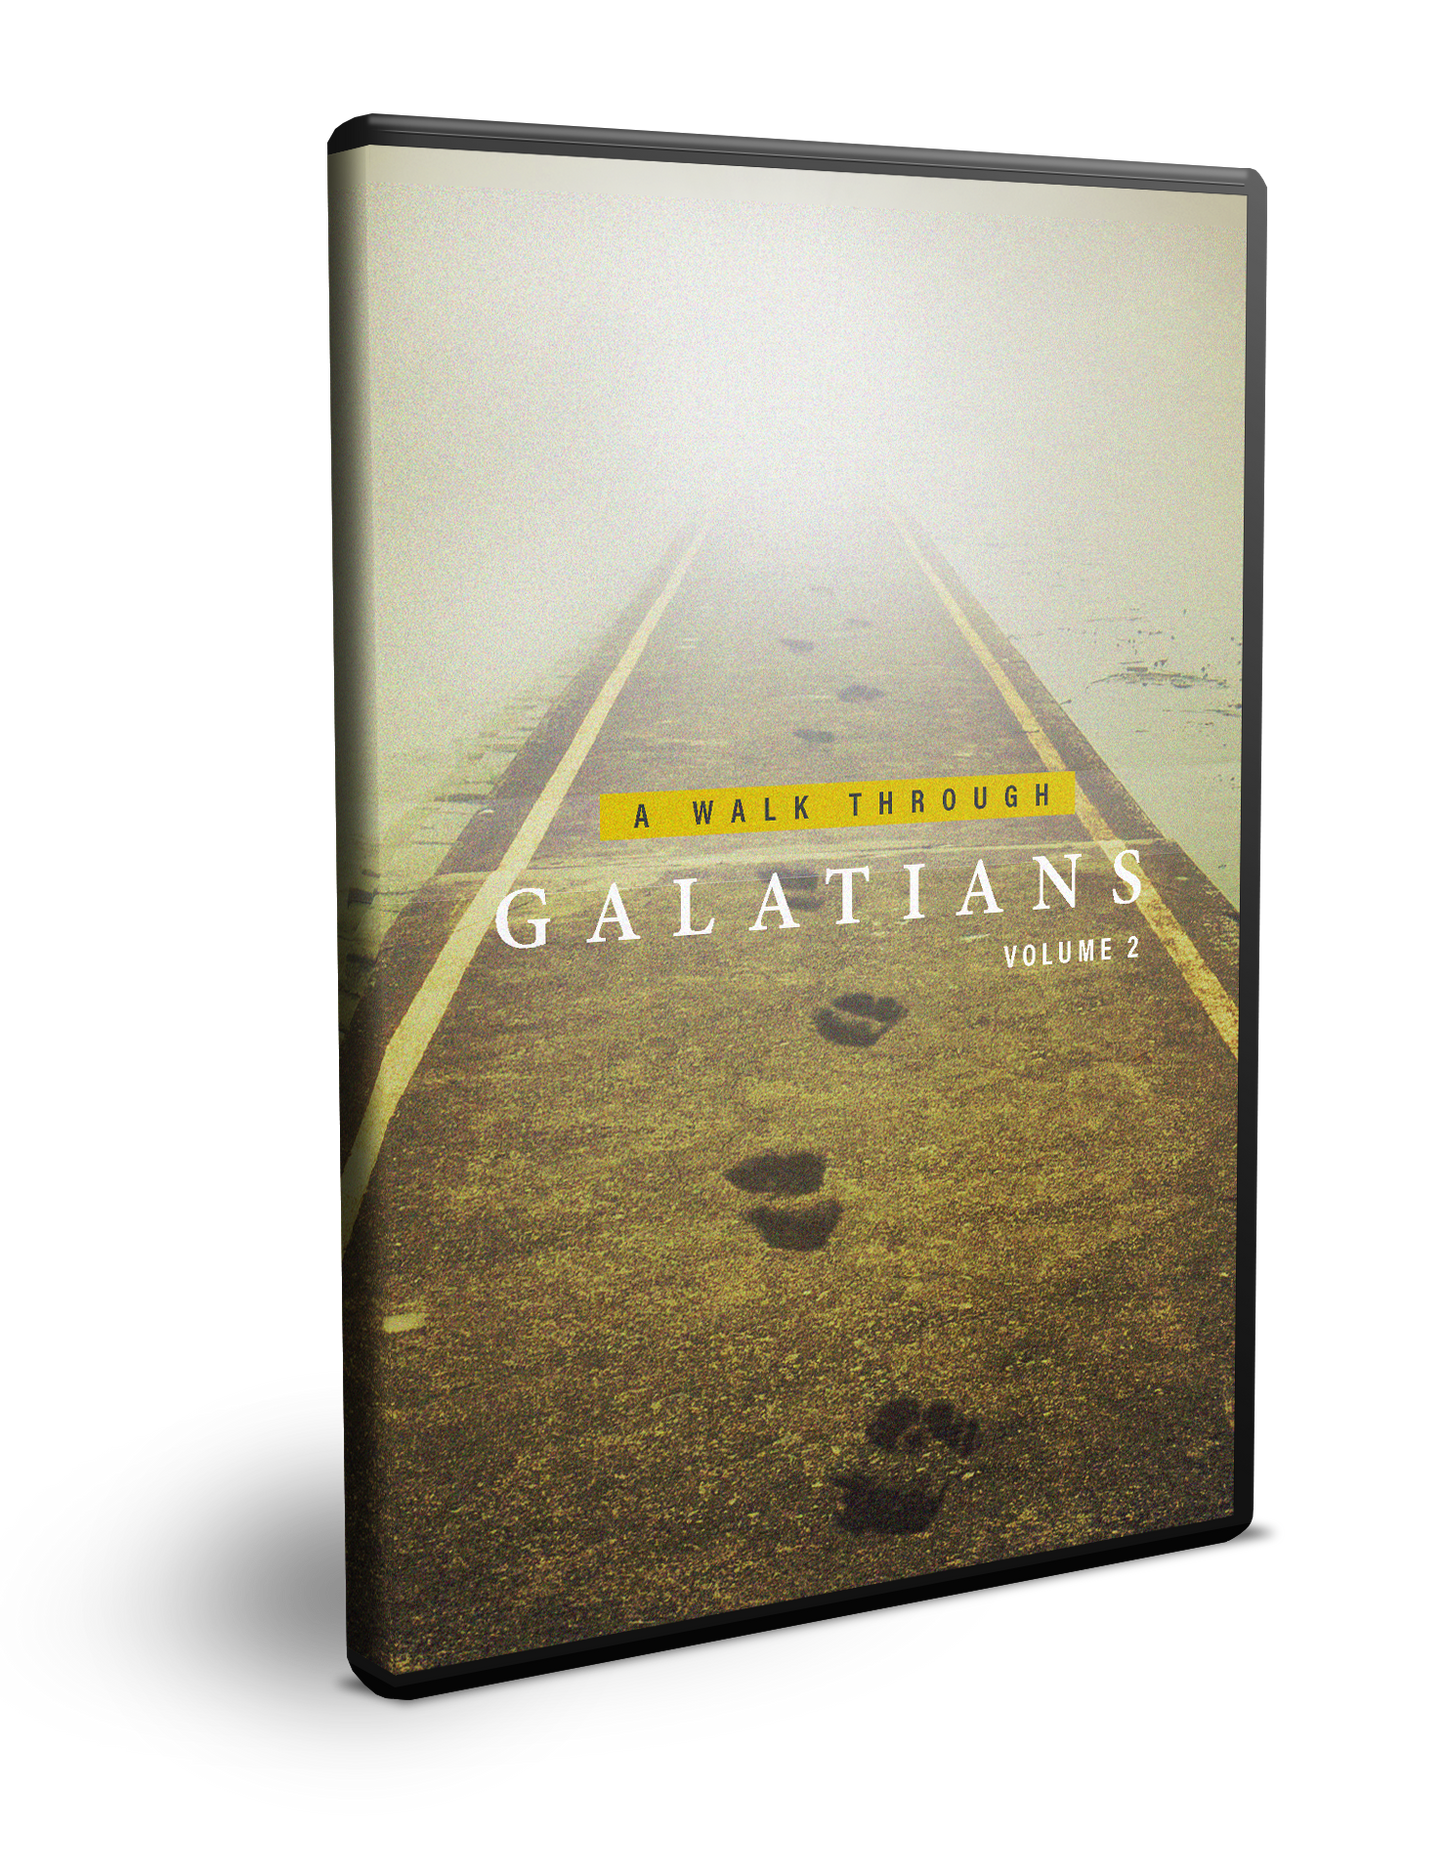 A Walk Through Galatians Volume 2 Series